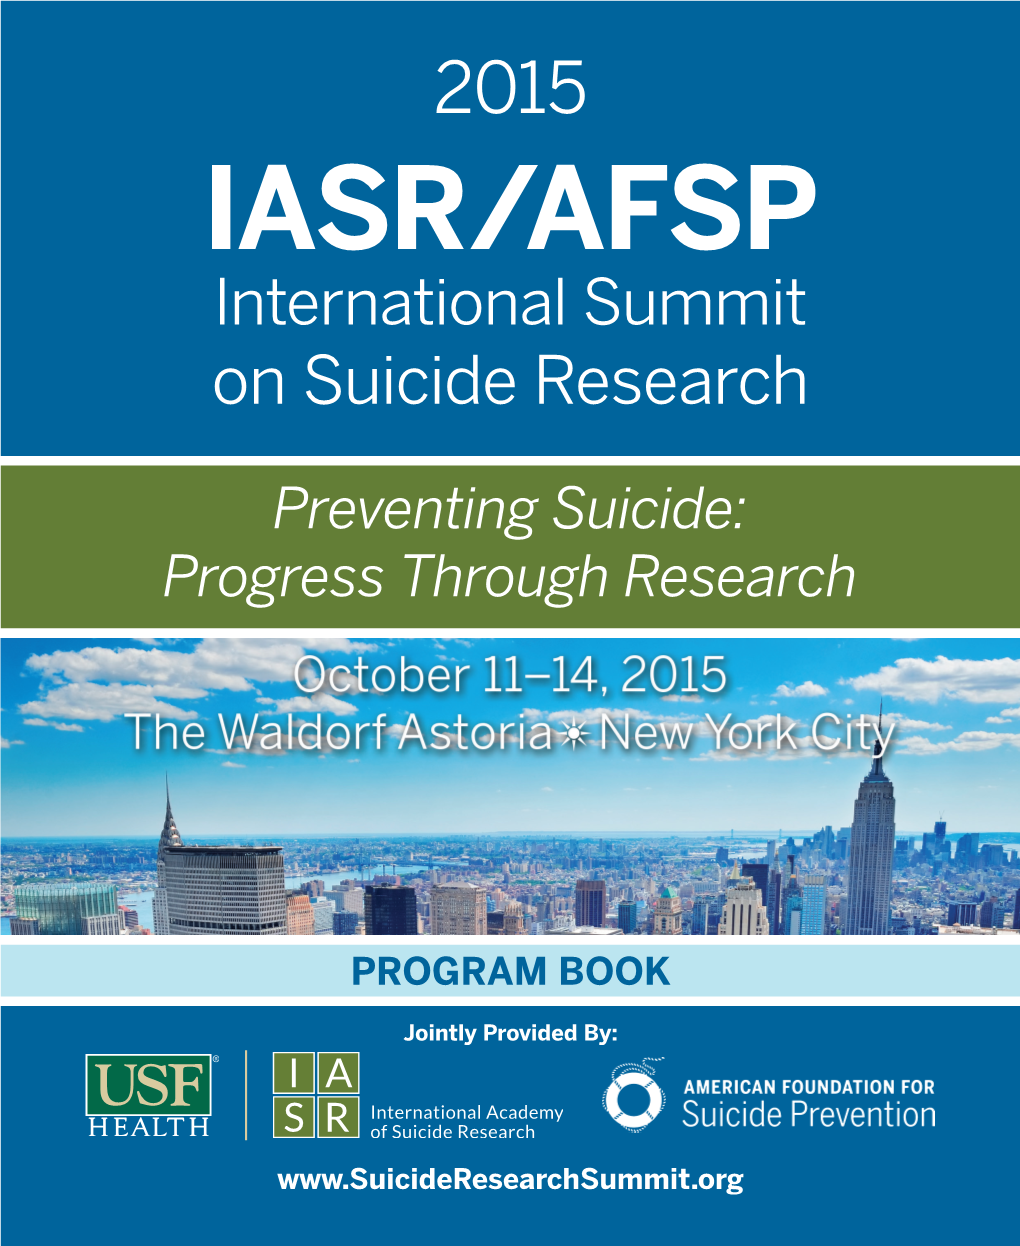 IASR/AFSP International Summit on Suicide Research